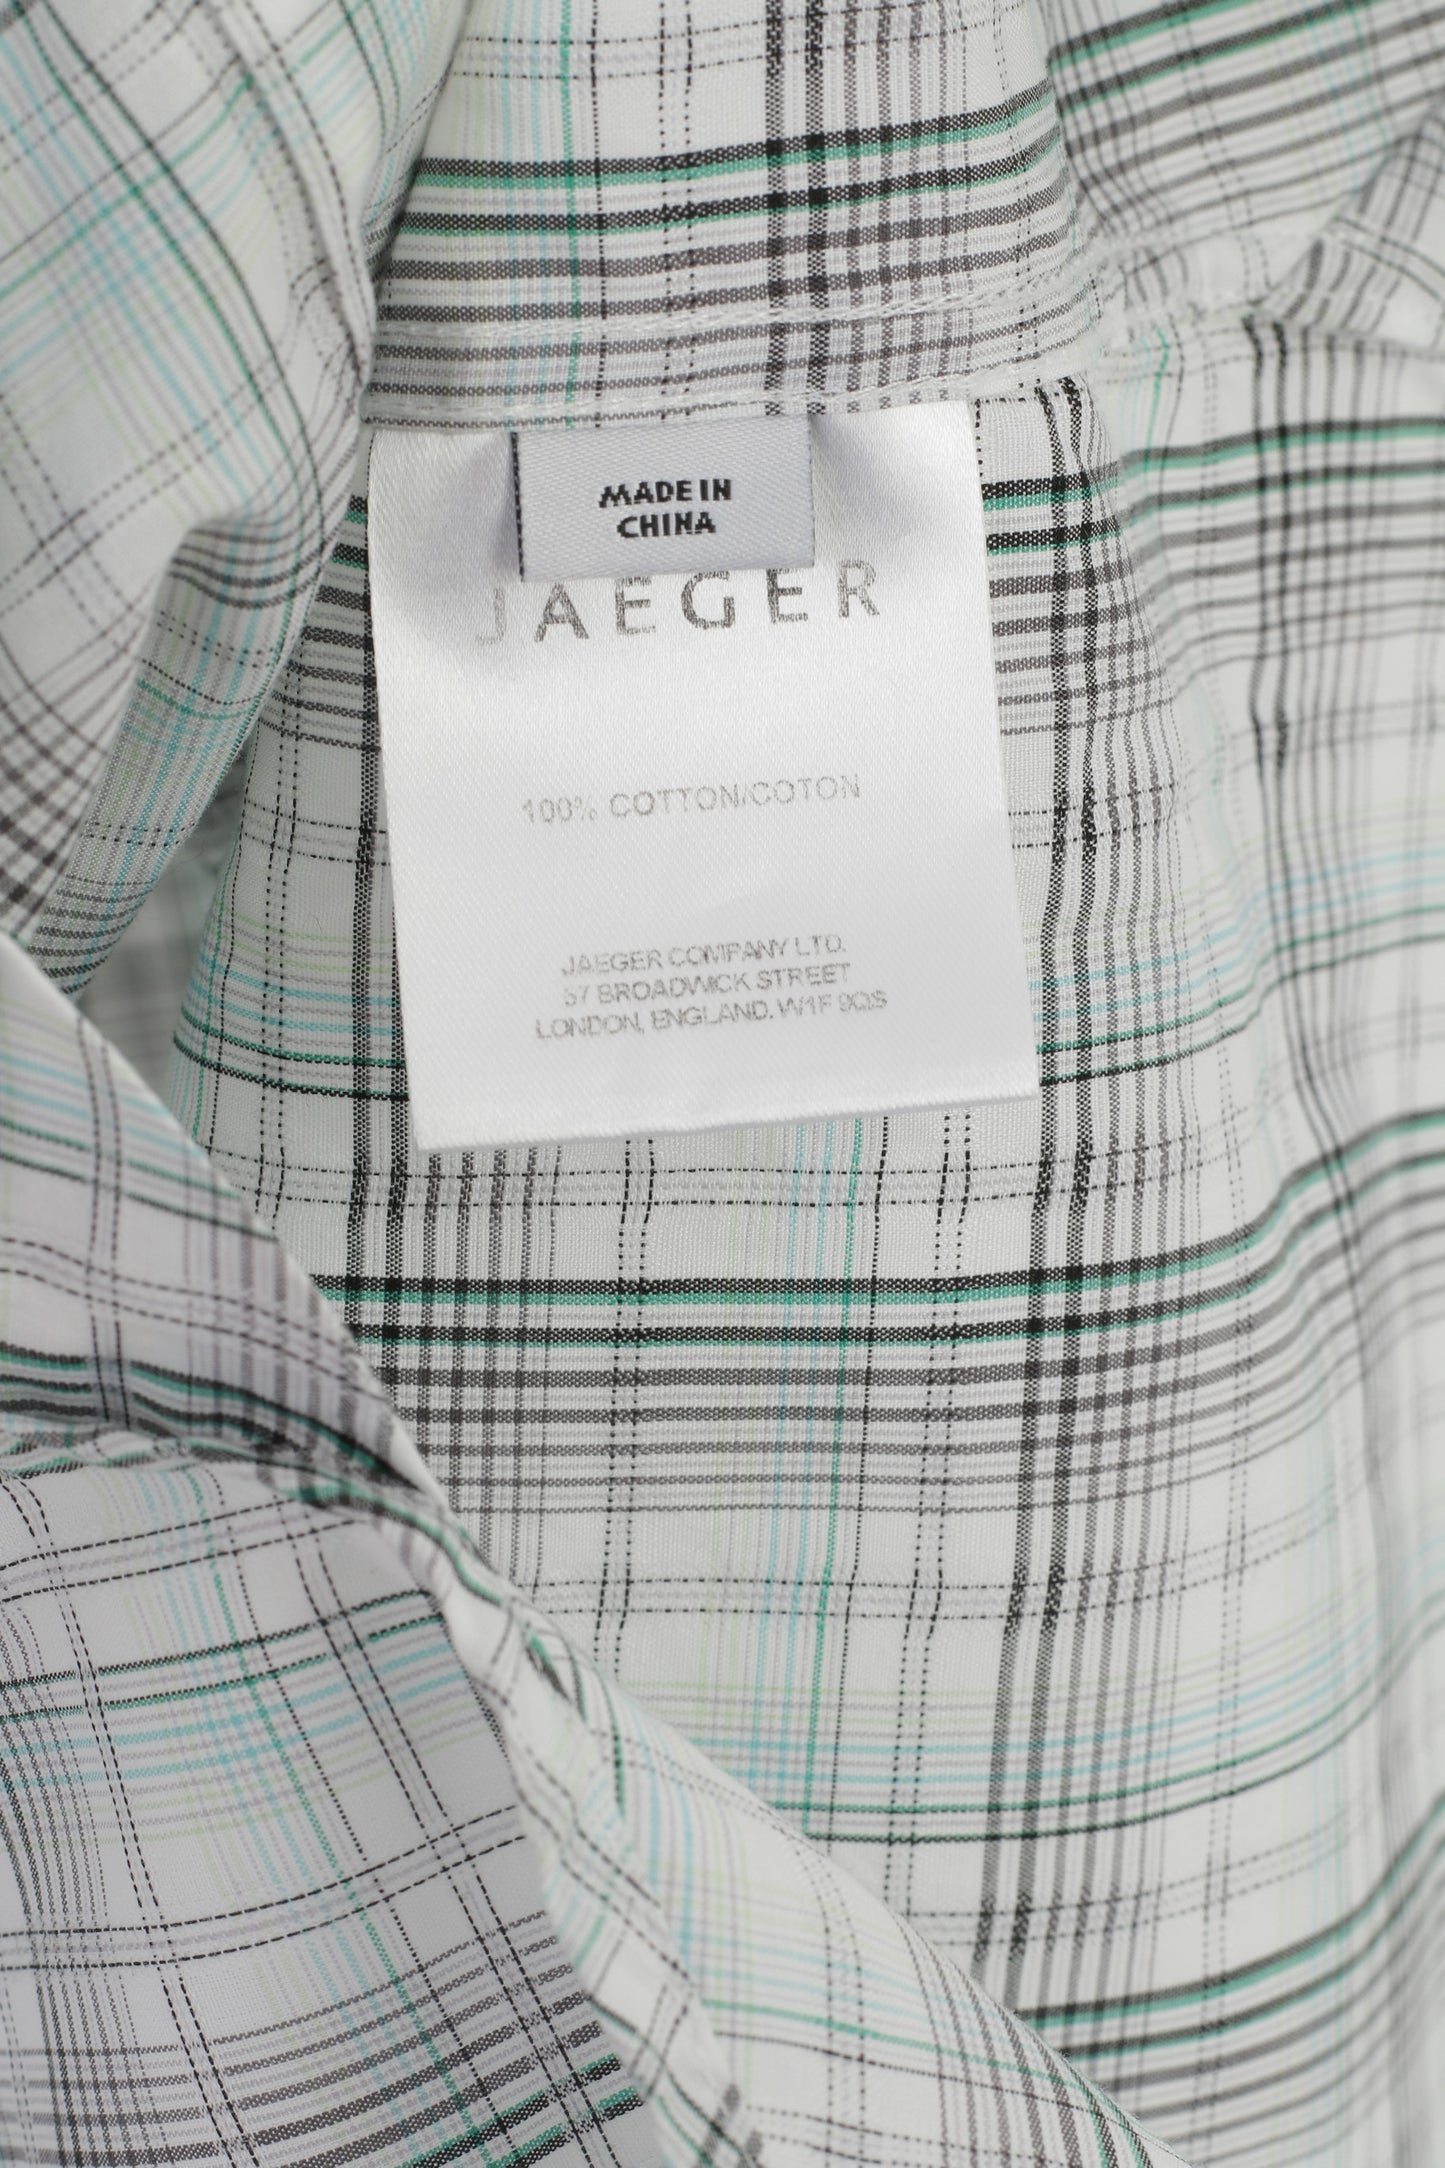 Jaeger London Men 15 S Casual Shirt Green Check Cotton Short Sleeve Top